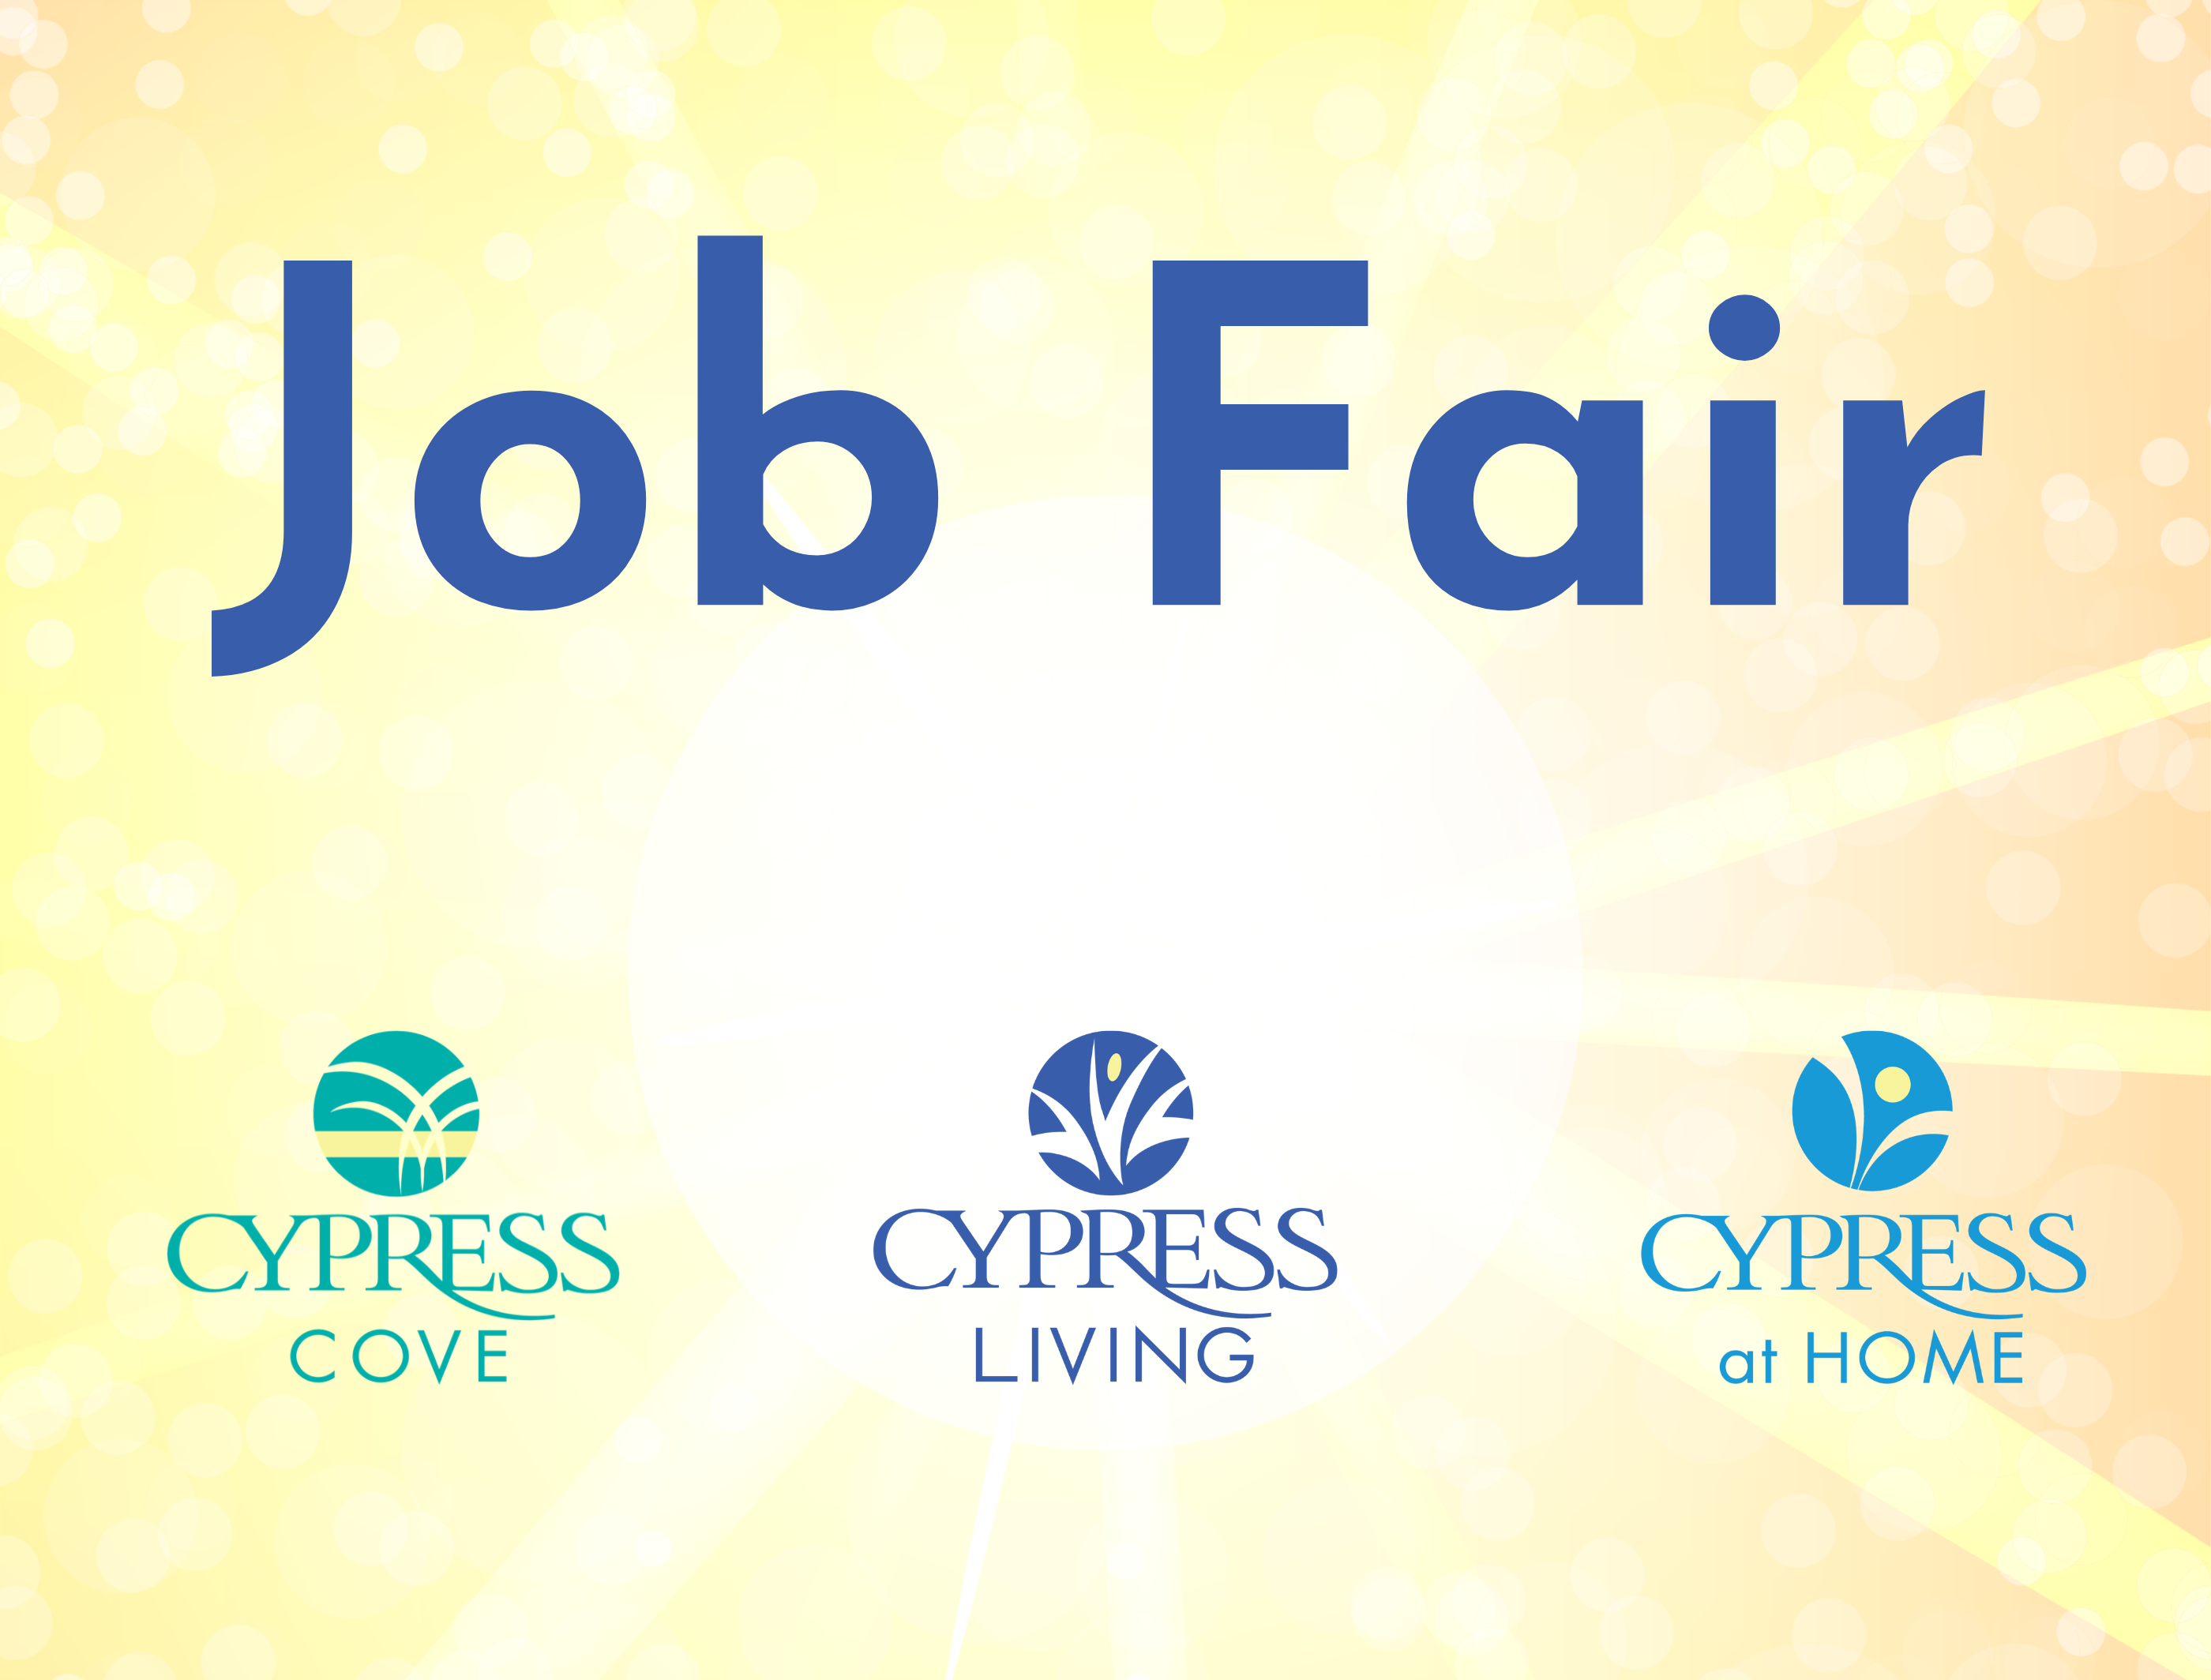 cypress-at-home-job-fair-february-11